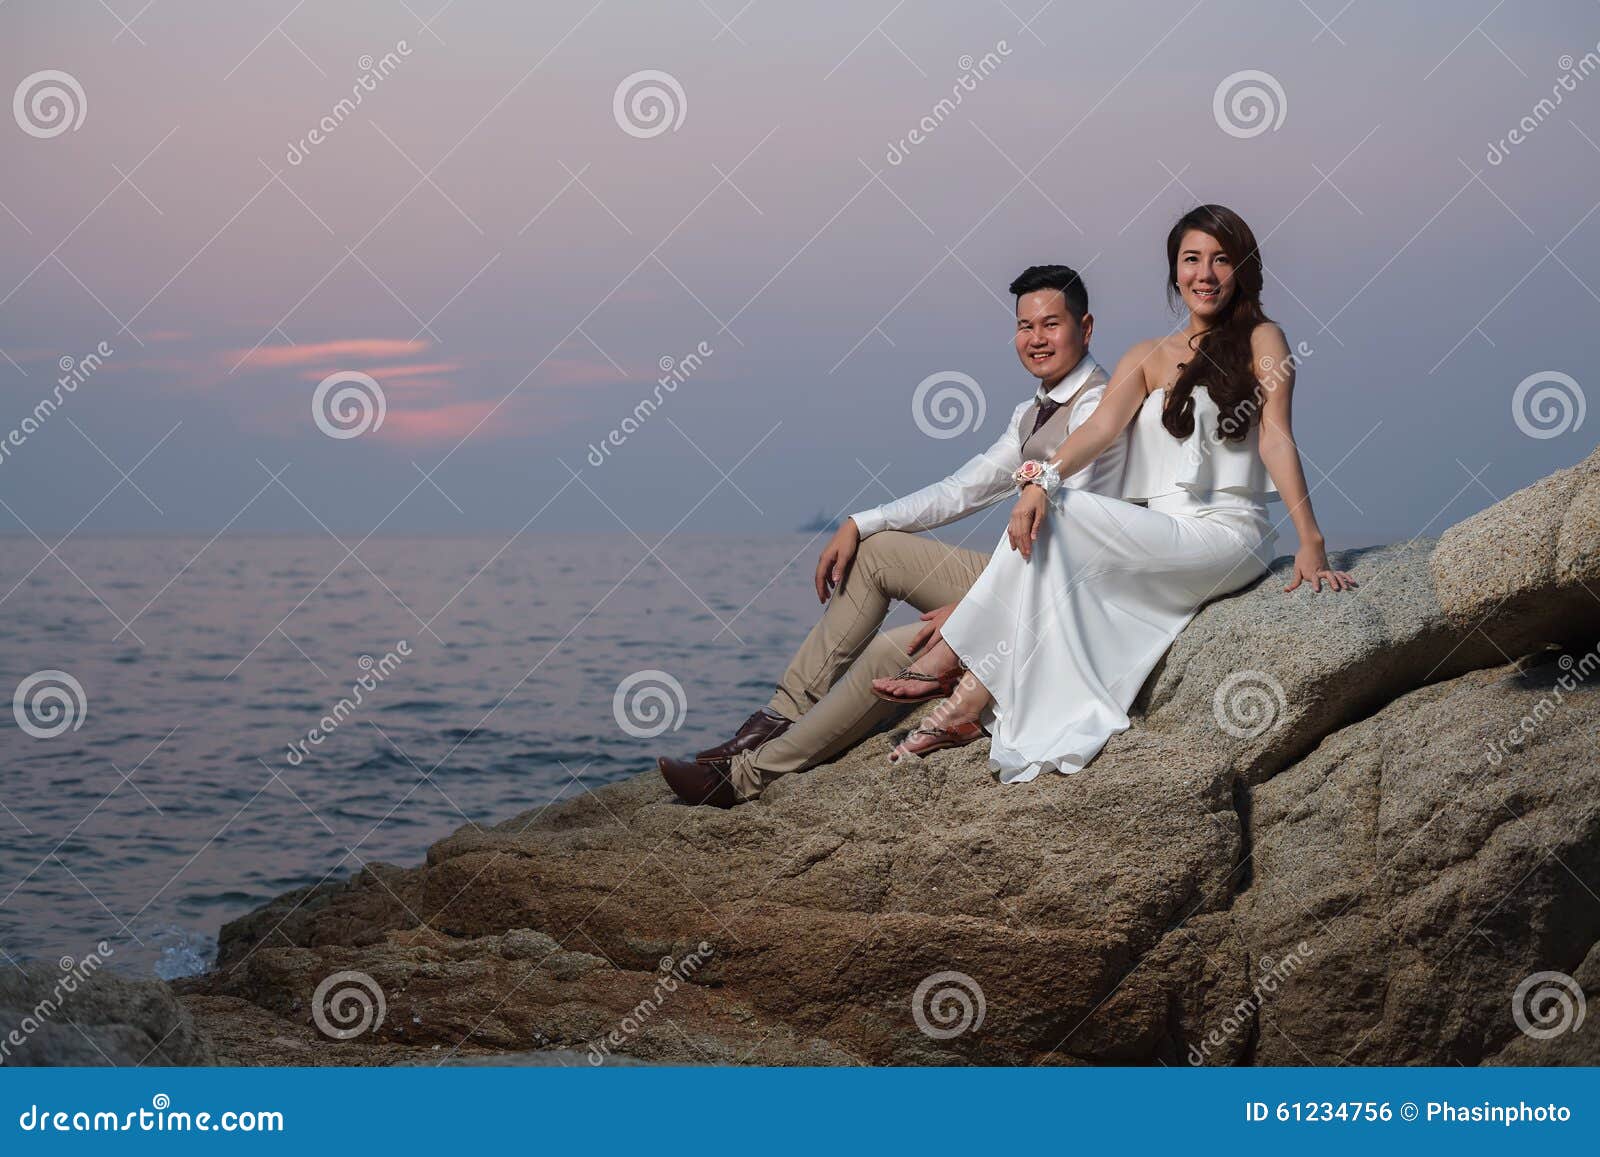 Pre Wedding Outdoor Romantic Stock Photo Image Of Wedding Casual